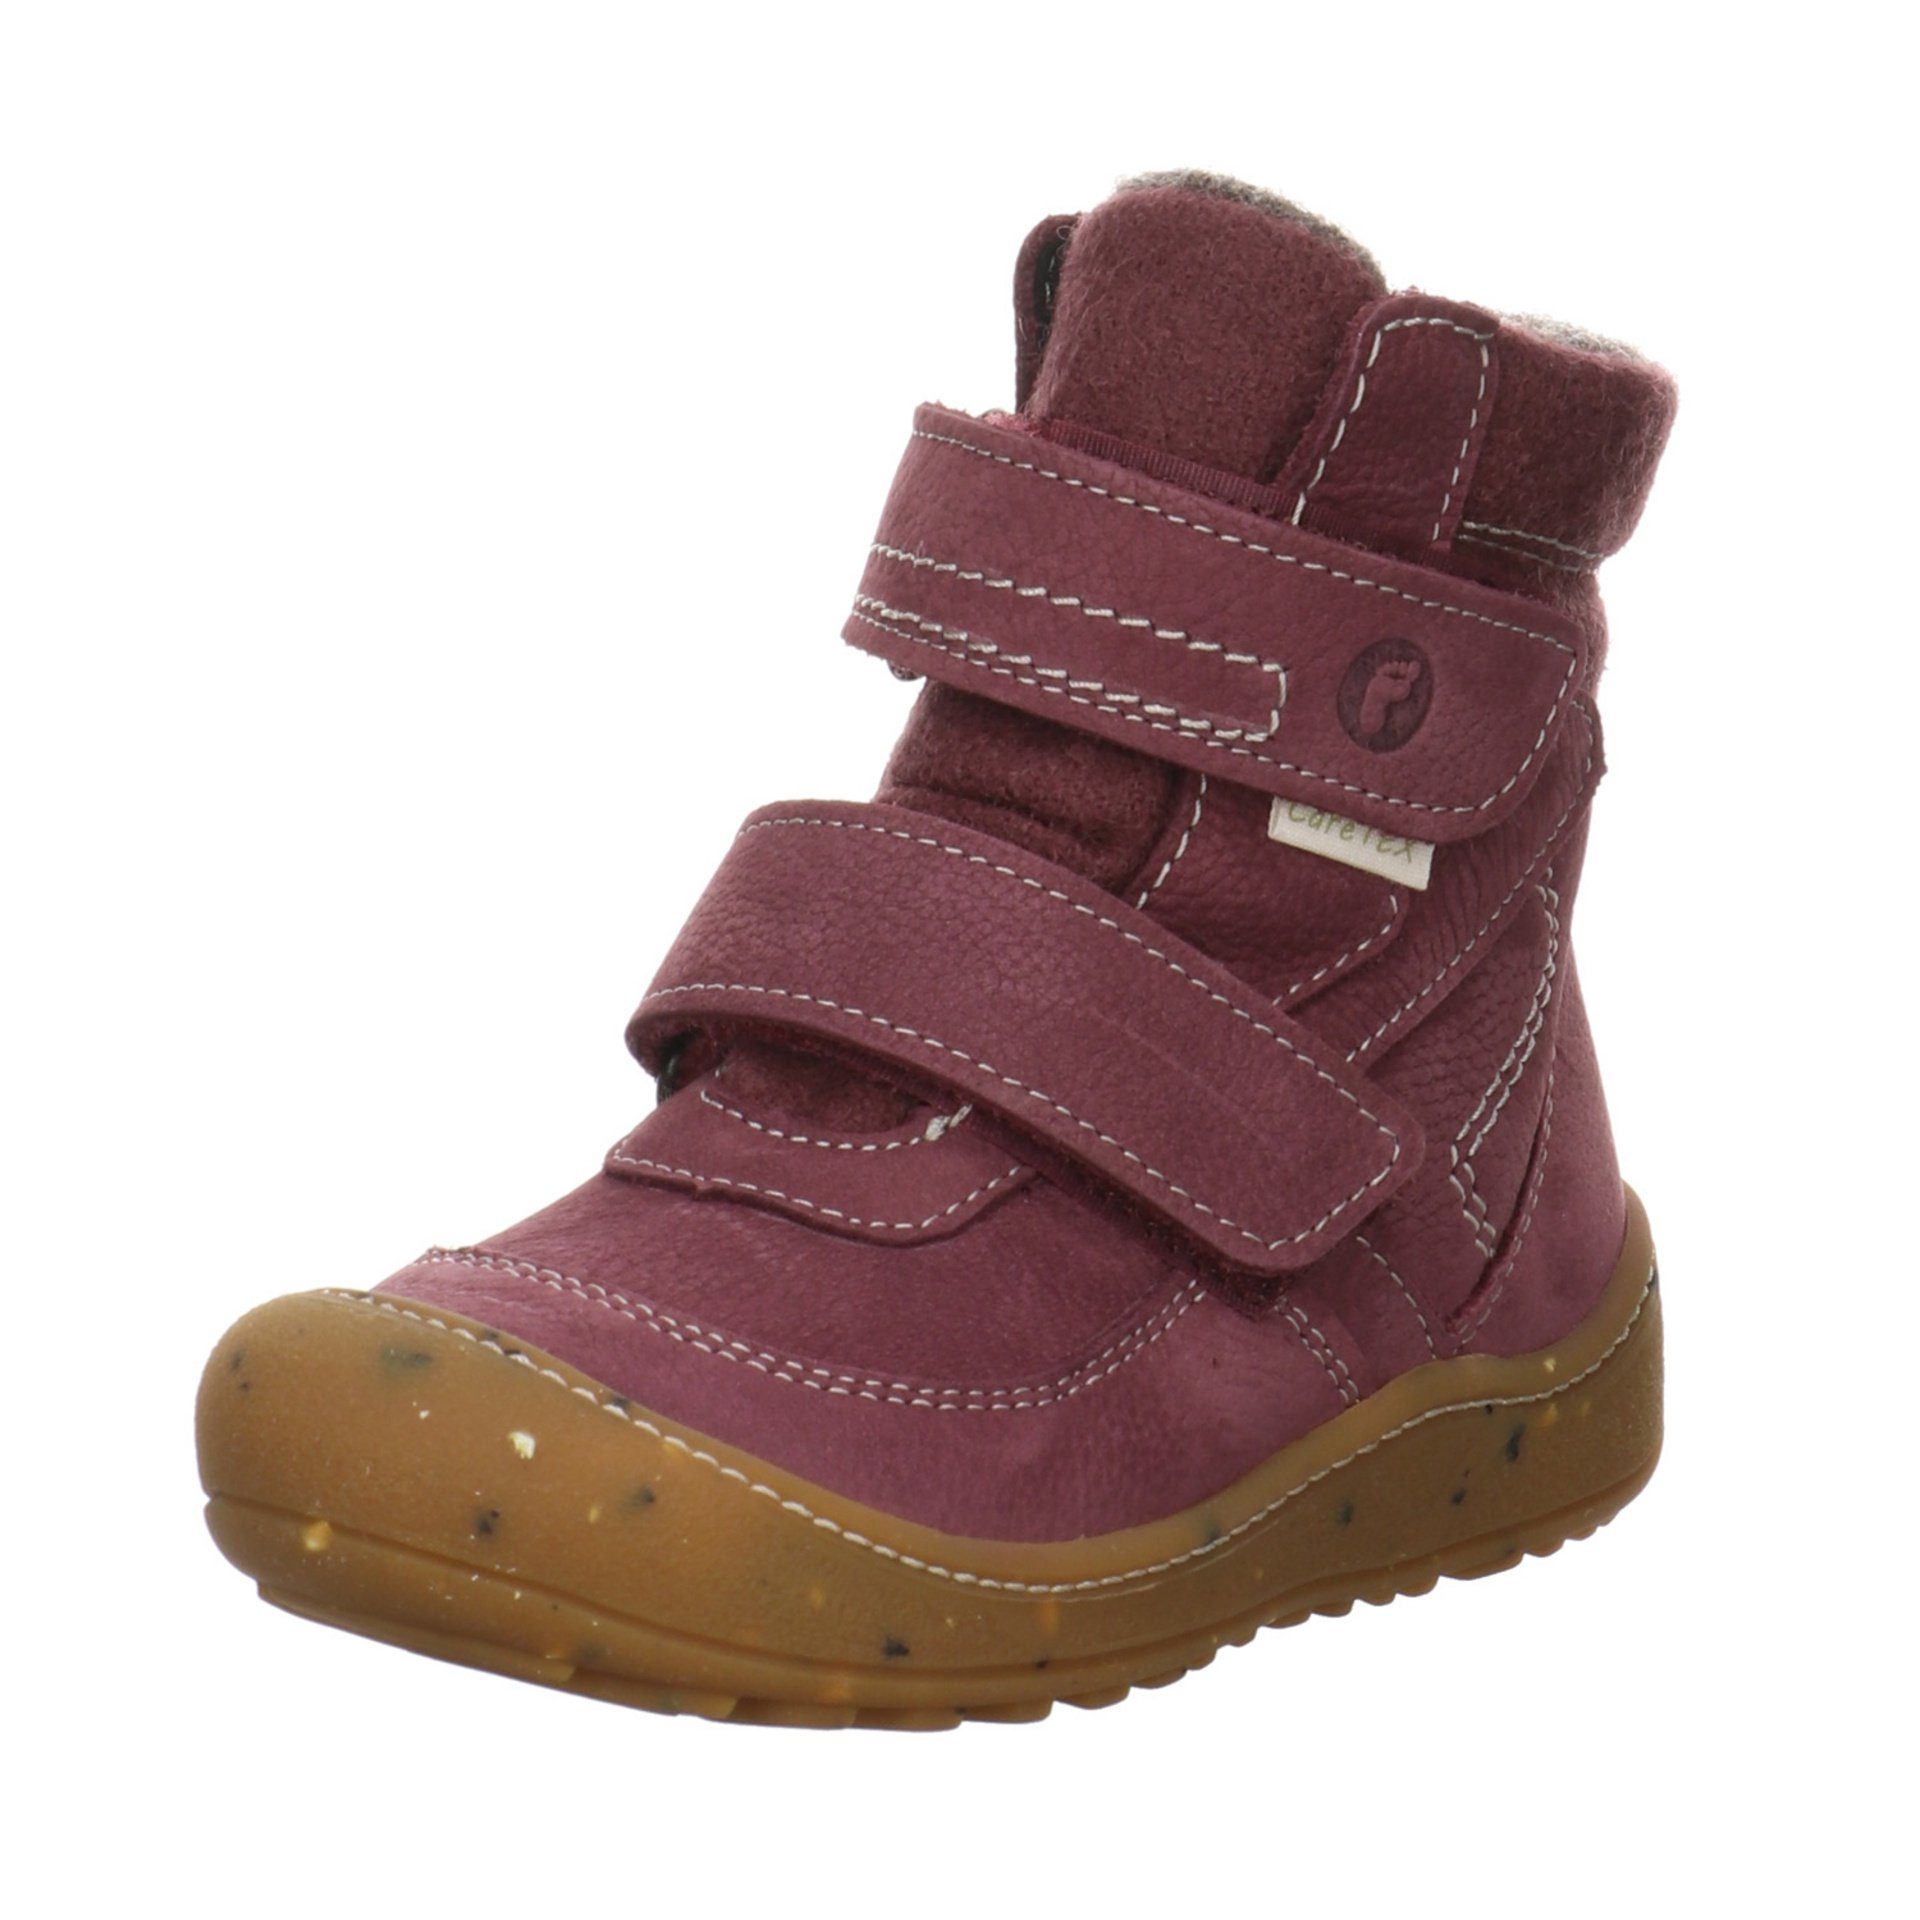 Leder-/Textilkombination Winterboots Boots Tex Ricosta uni pflaume Leder-/Textilkombination Wood